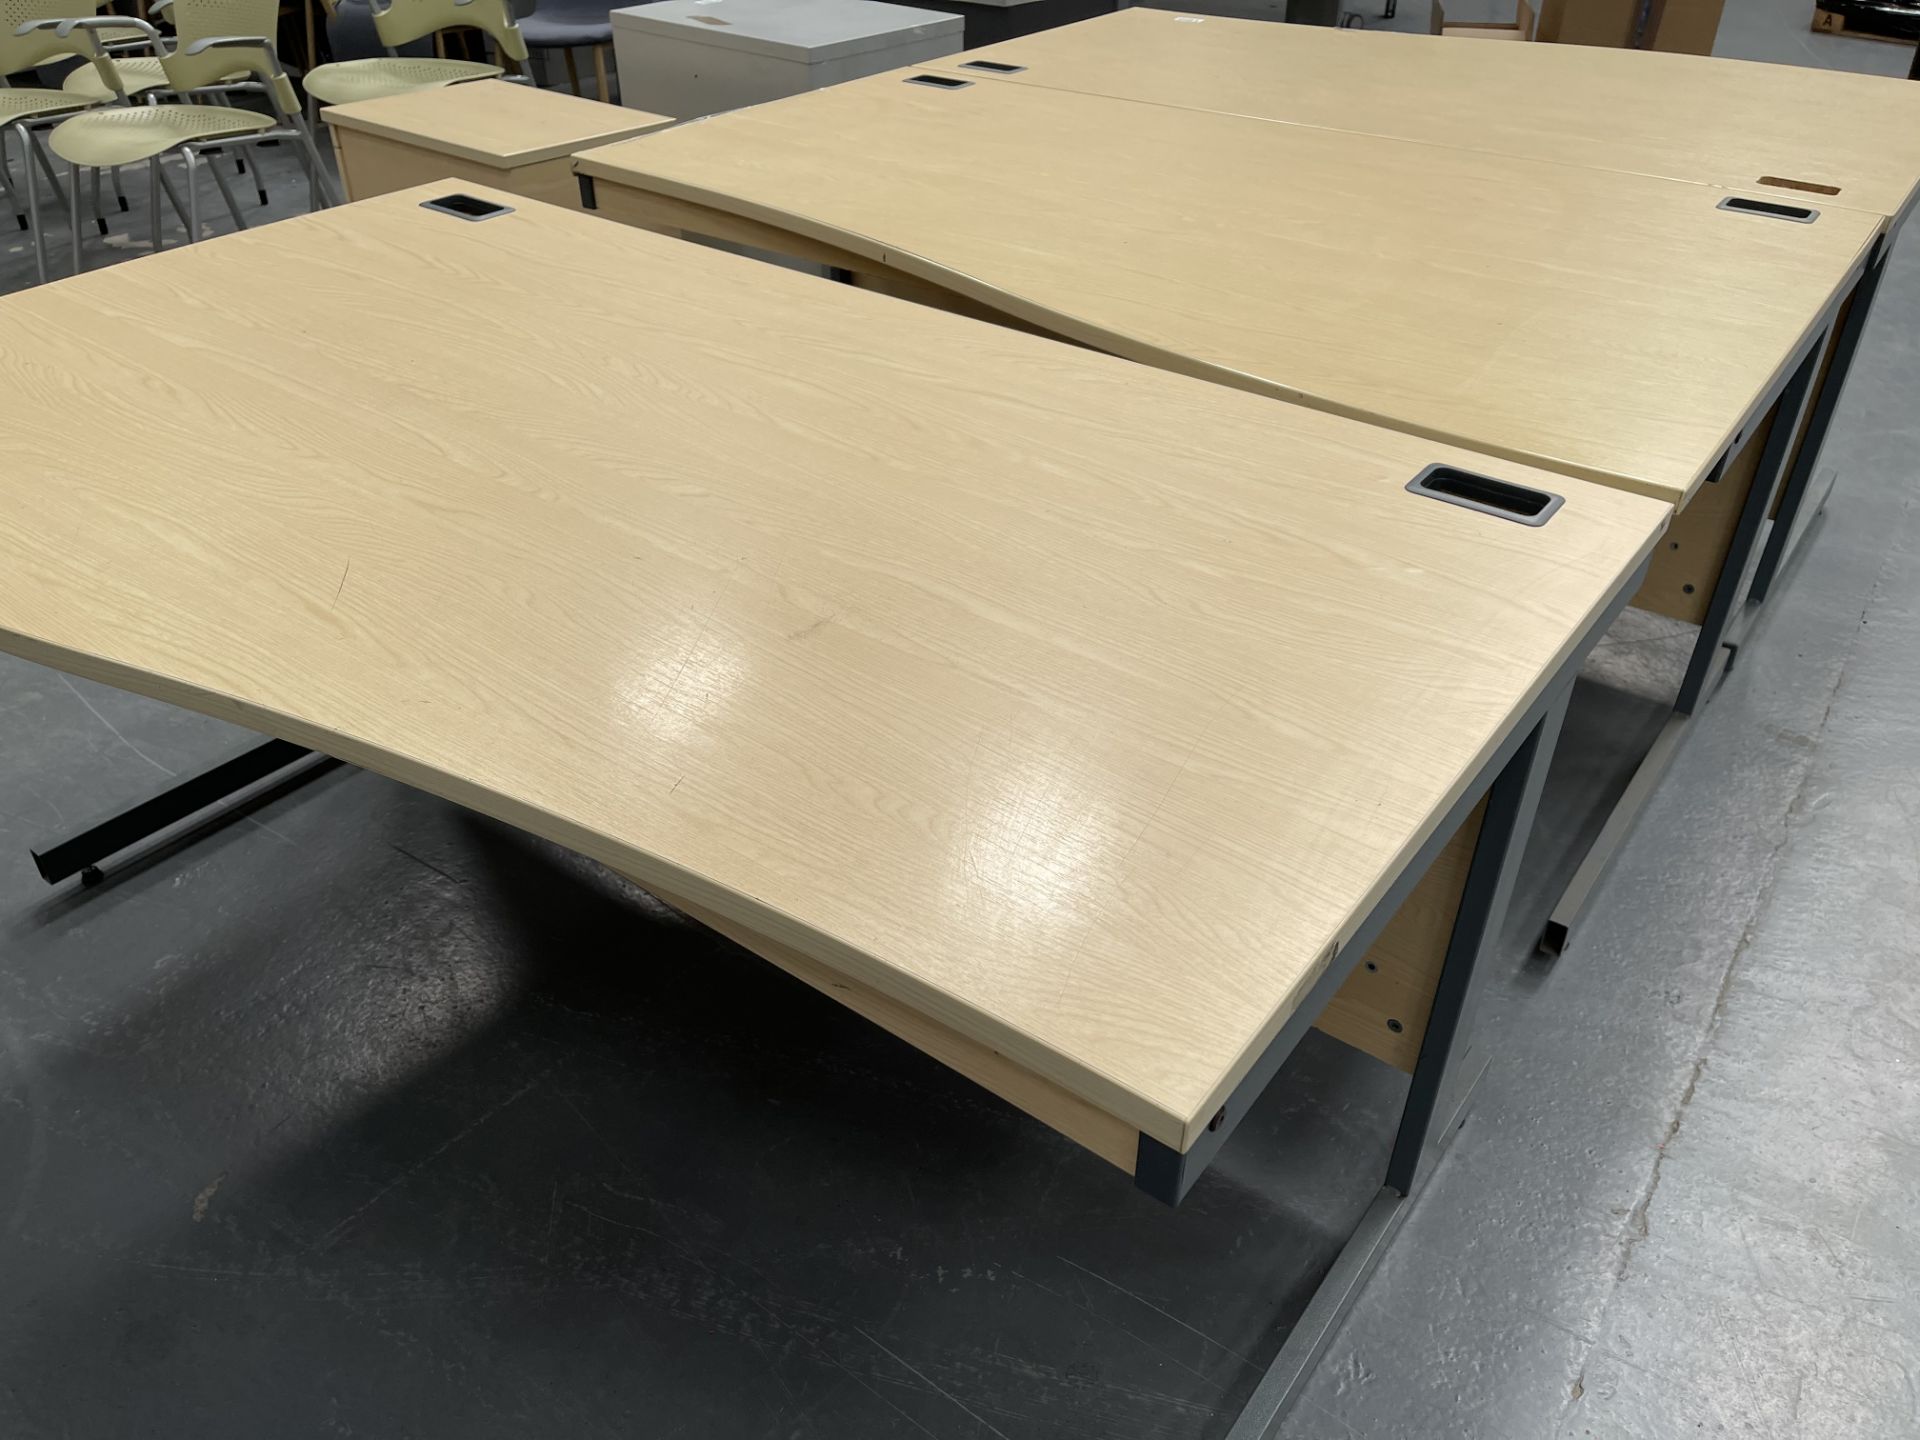 3 x Wooden Effect Work/Office Desks | 100cm x 160cm x 72cm - Image 3 of 3